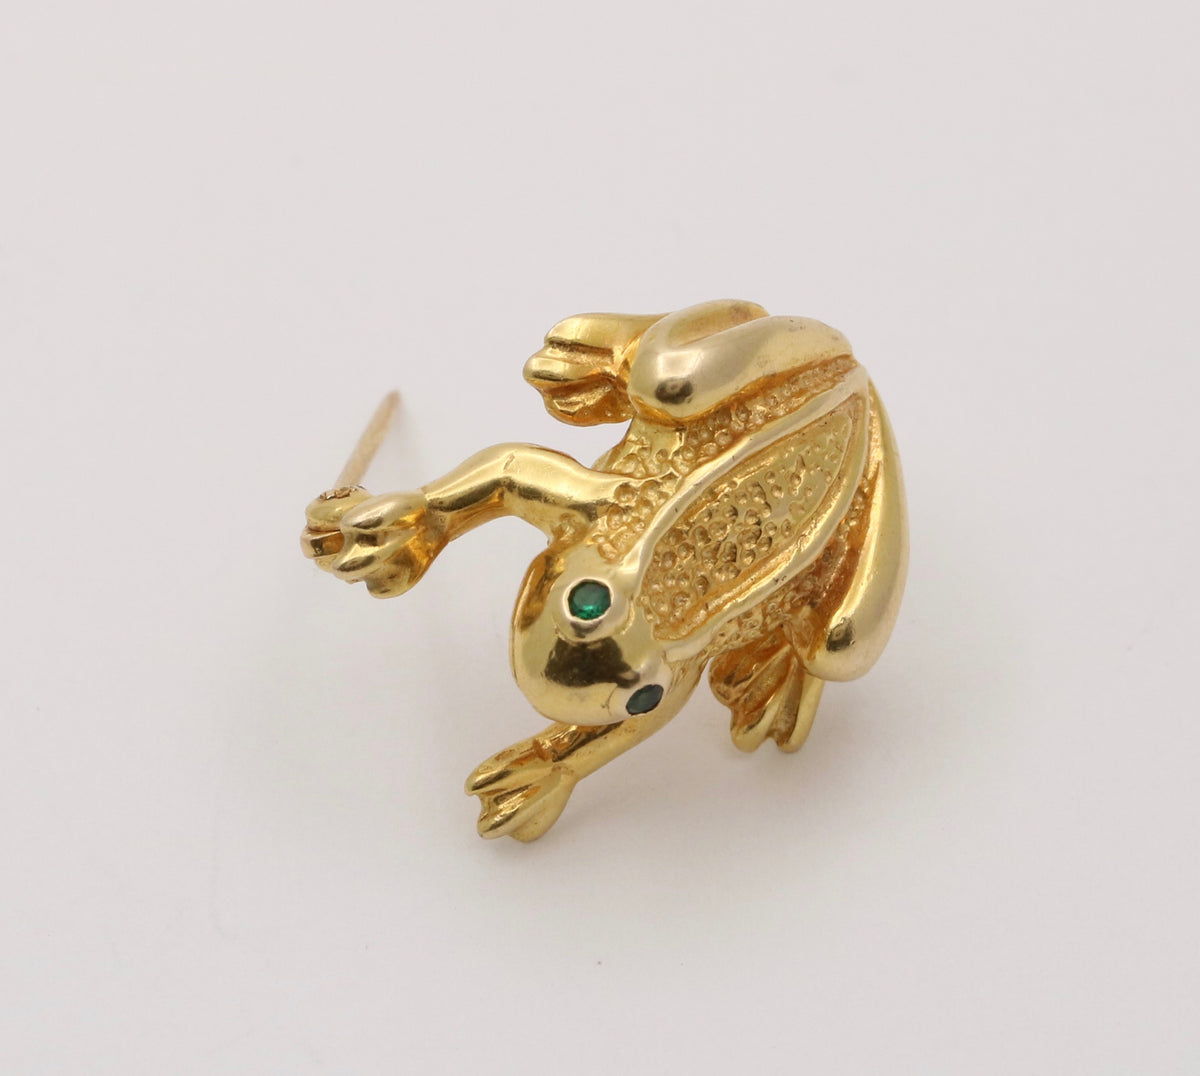 Vintage 14K Gold Frog Pin